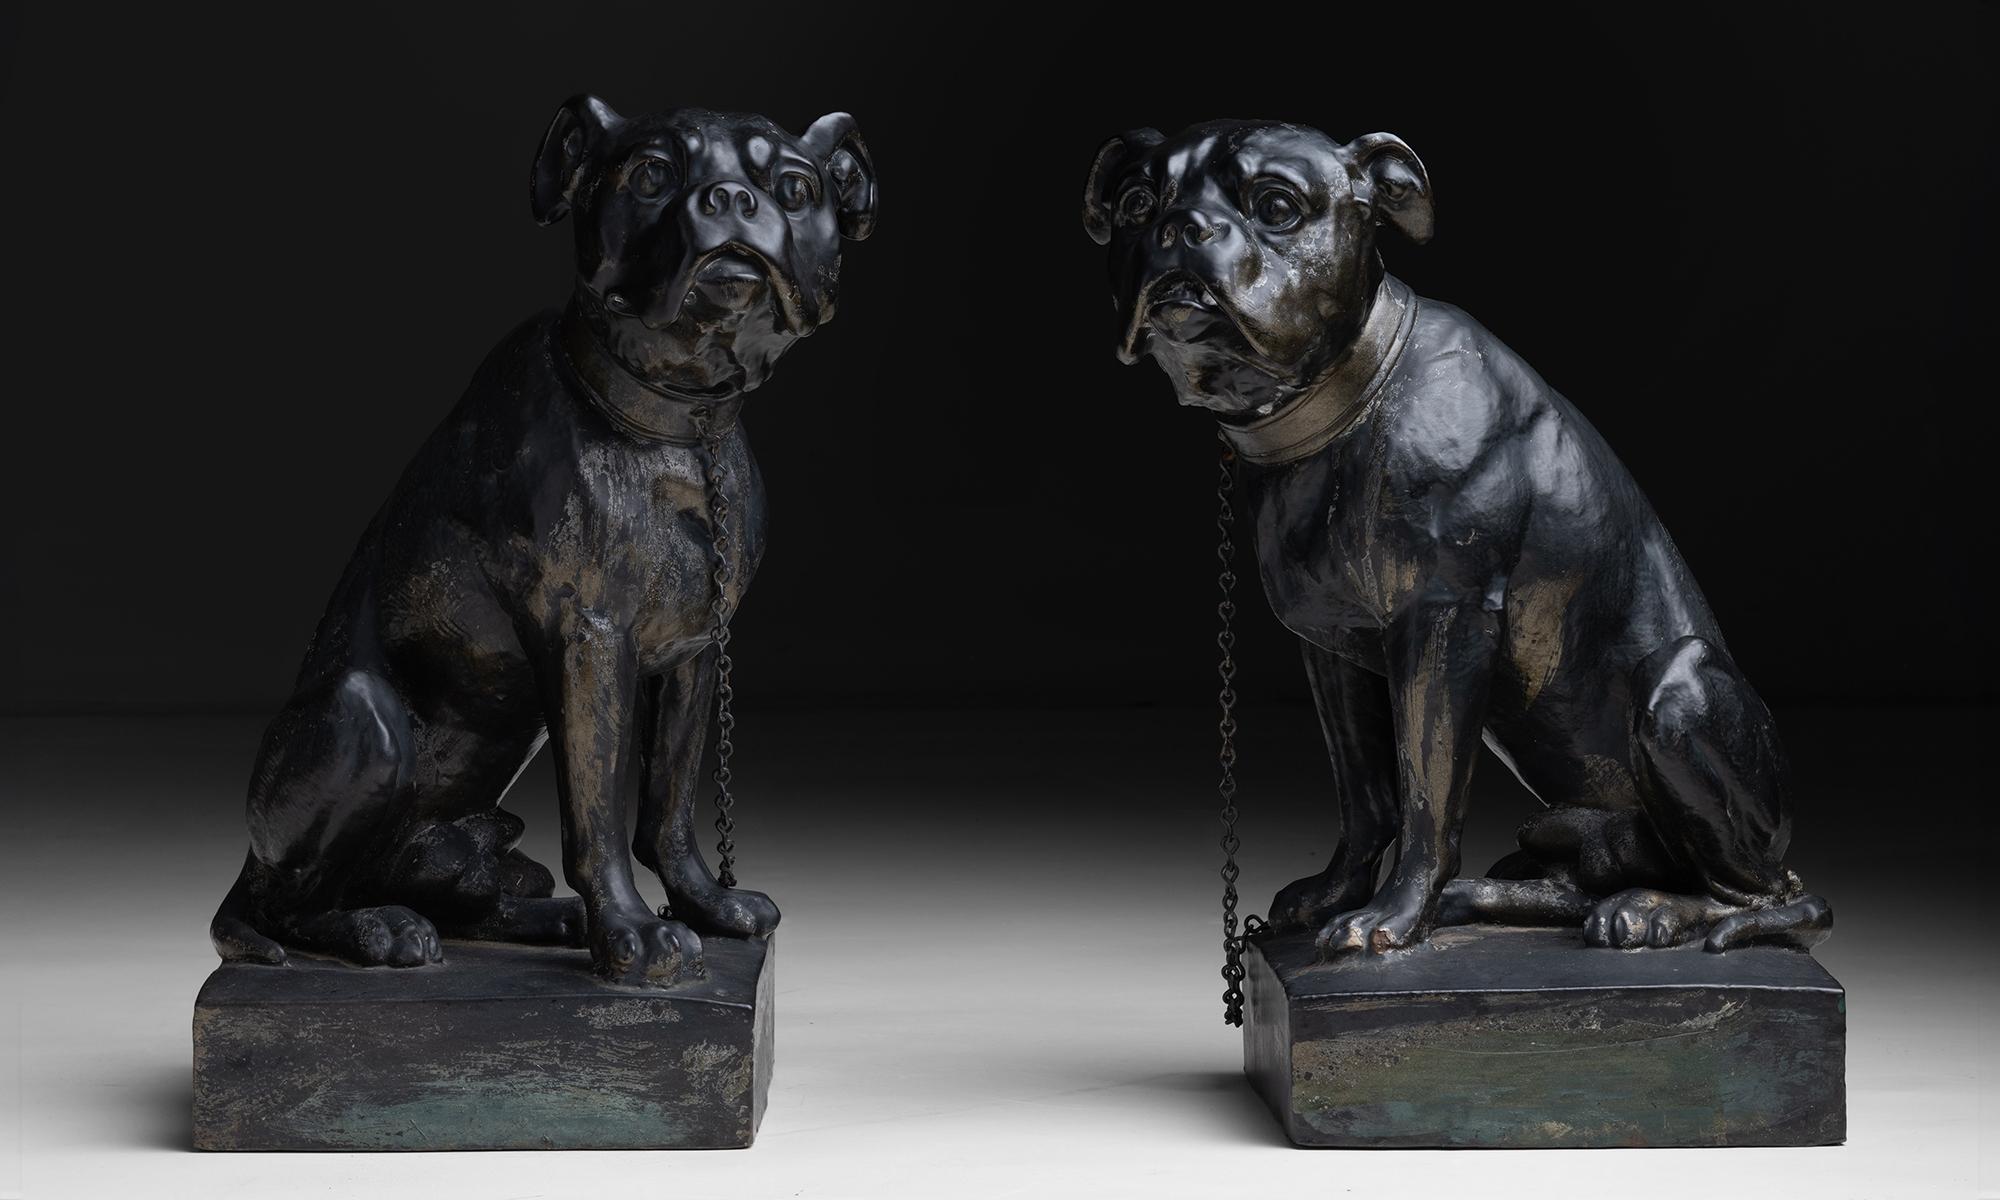 Bulldog Statues
England circa 1910
Cast iron and bronze bulldog statues with chain leashes.
13”w x 11”d x 19”h